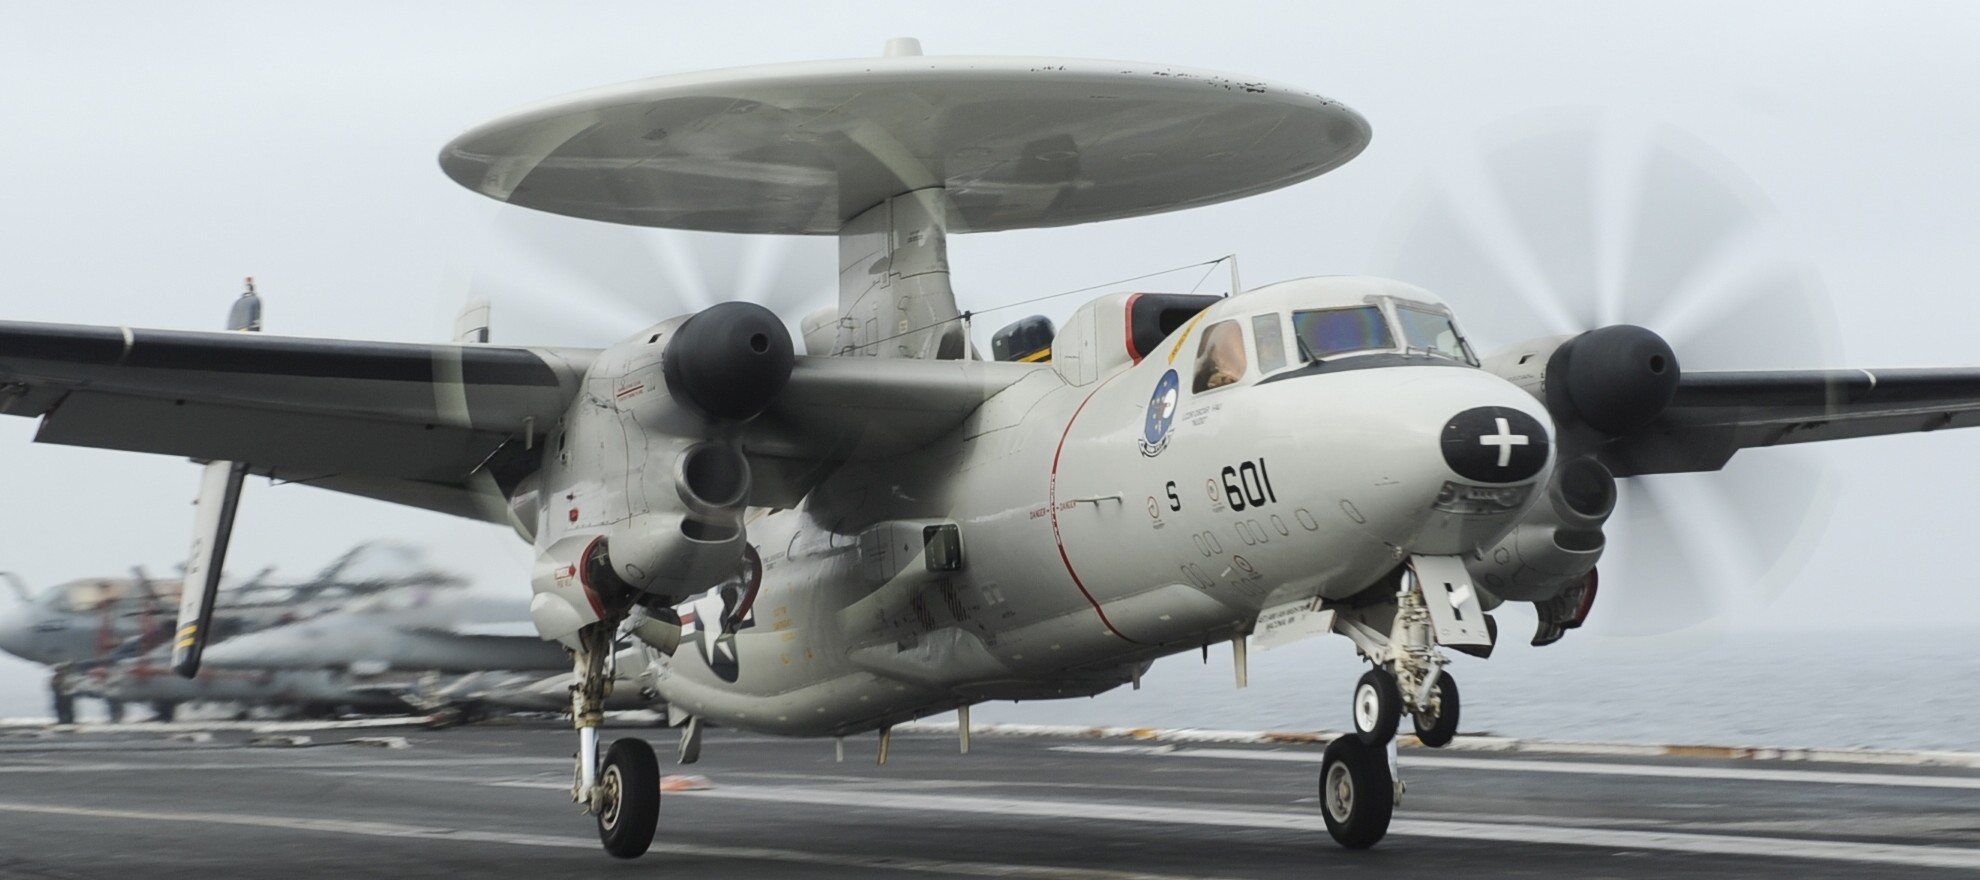 vaw-117 wallbangers carrier airborne early warning squadron navy e-2c hawkeye cvw-11 uss nimitz cvn-68 149